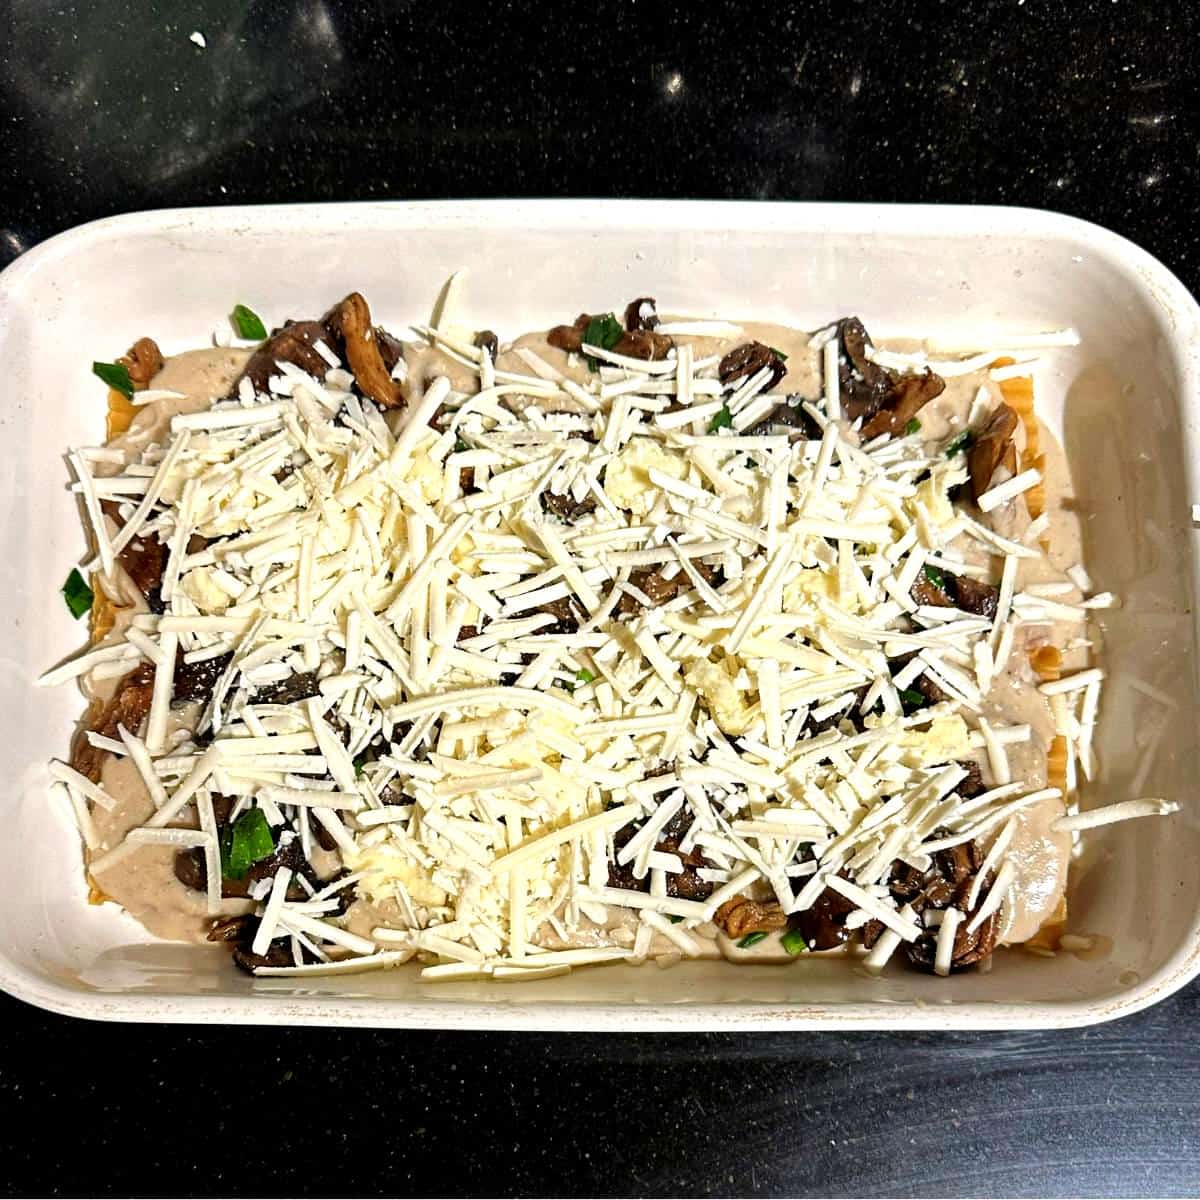 Parmesan and mozzarella scattered over mushroom layer in lasagna pan.